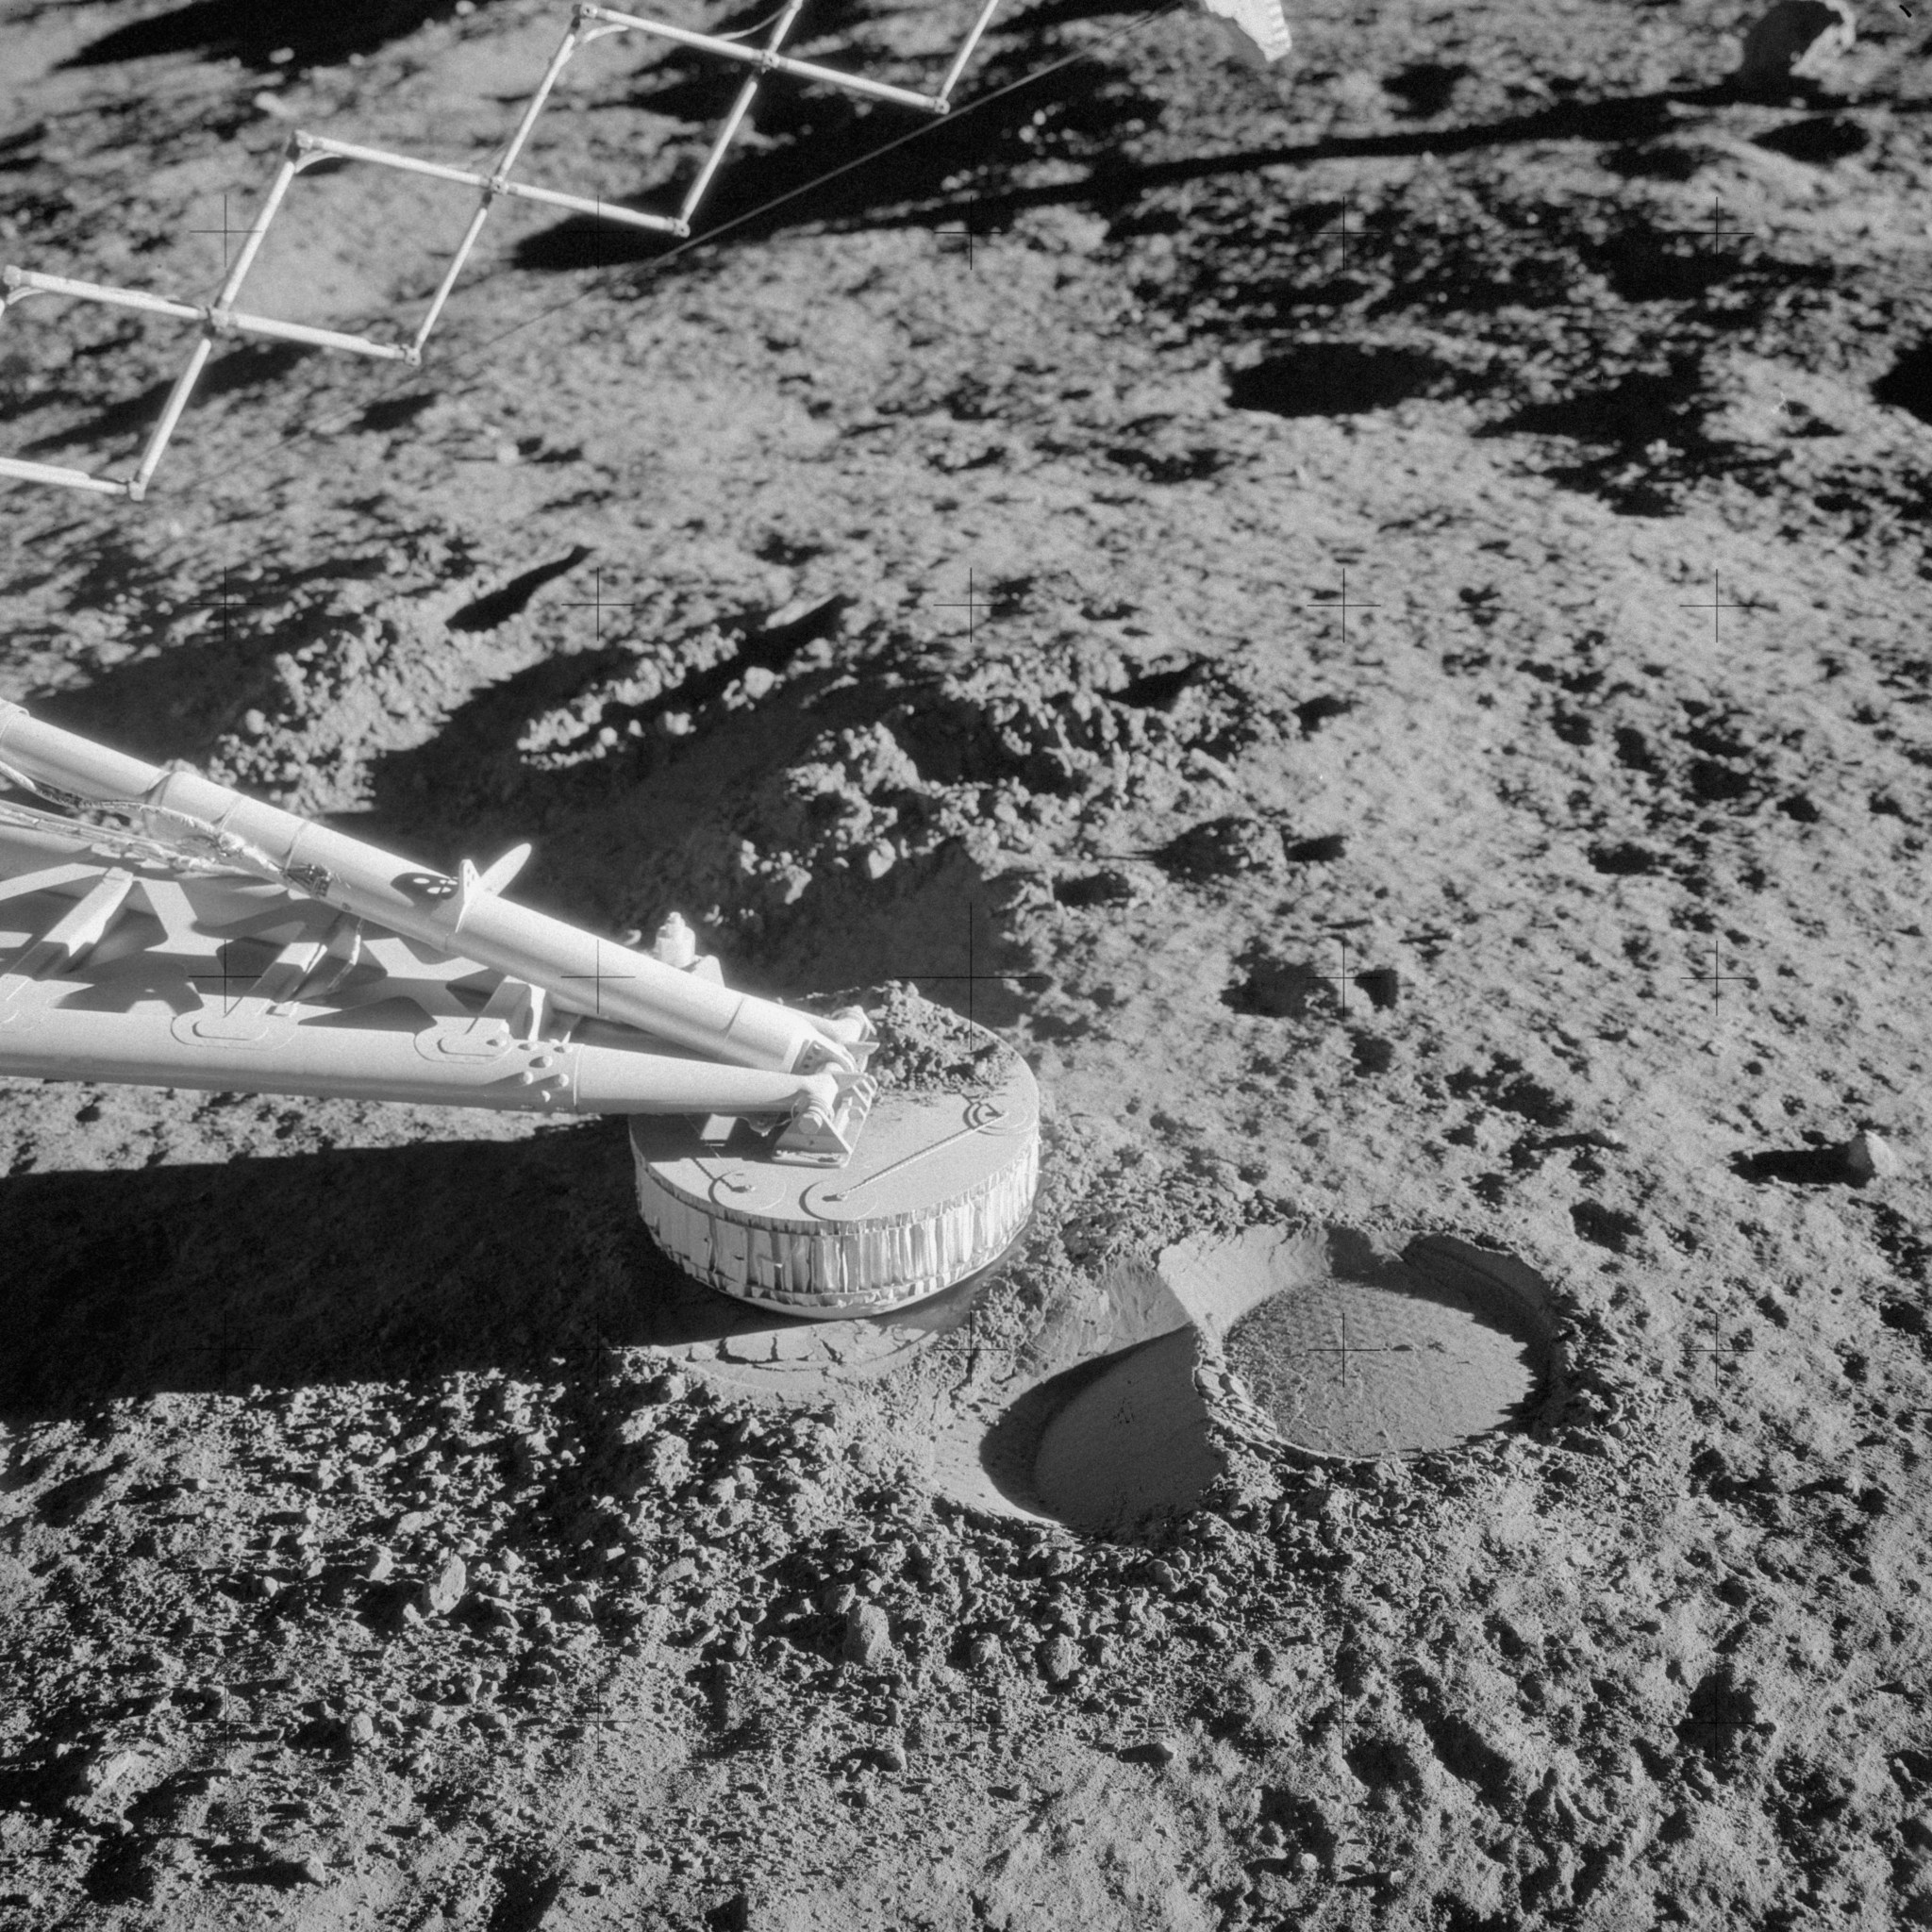 Close-up view of a footpad of Apollo 12 Surveyor 3 spacecraft